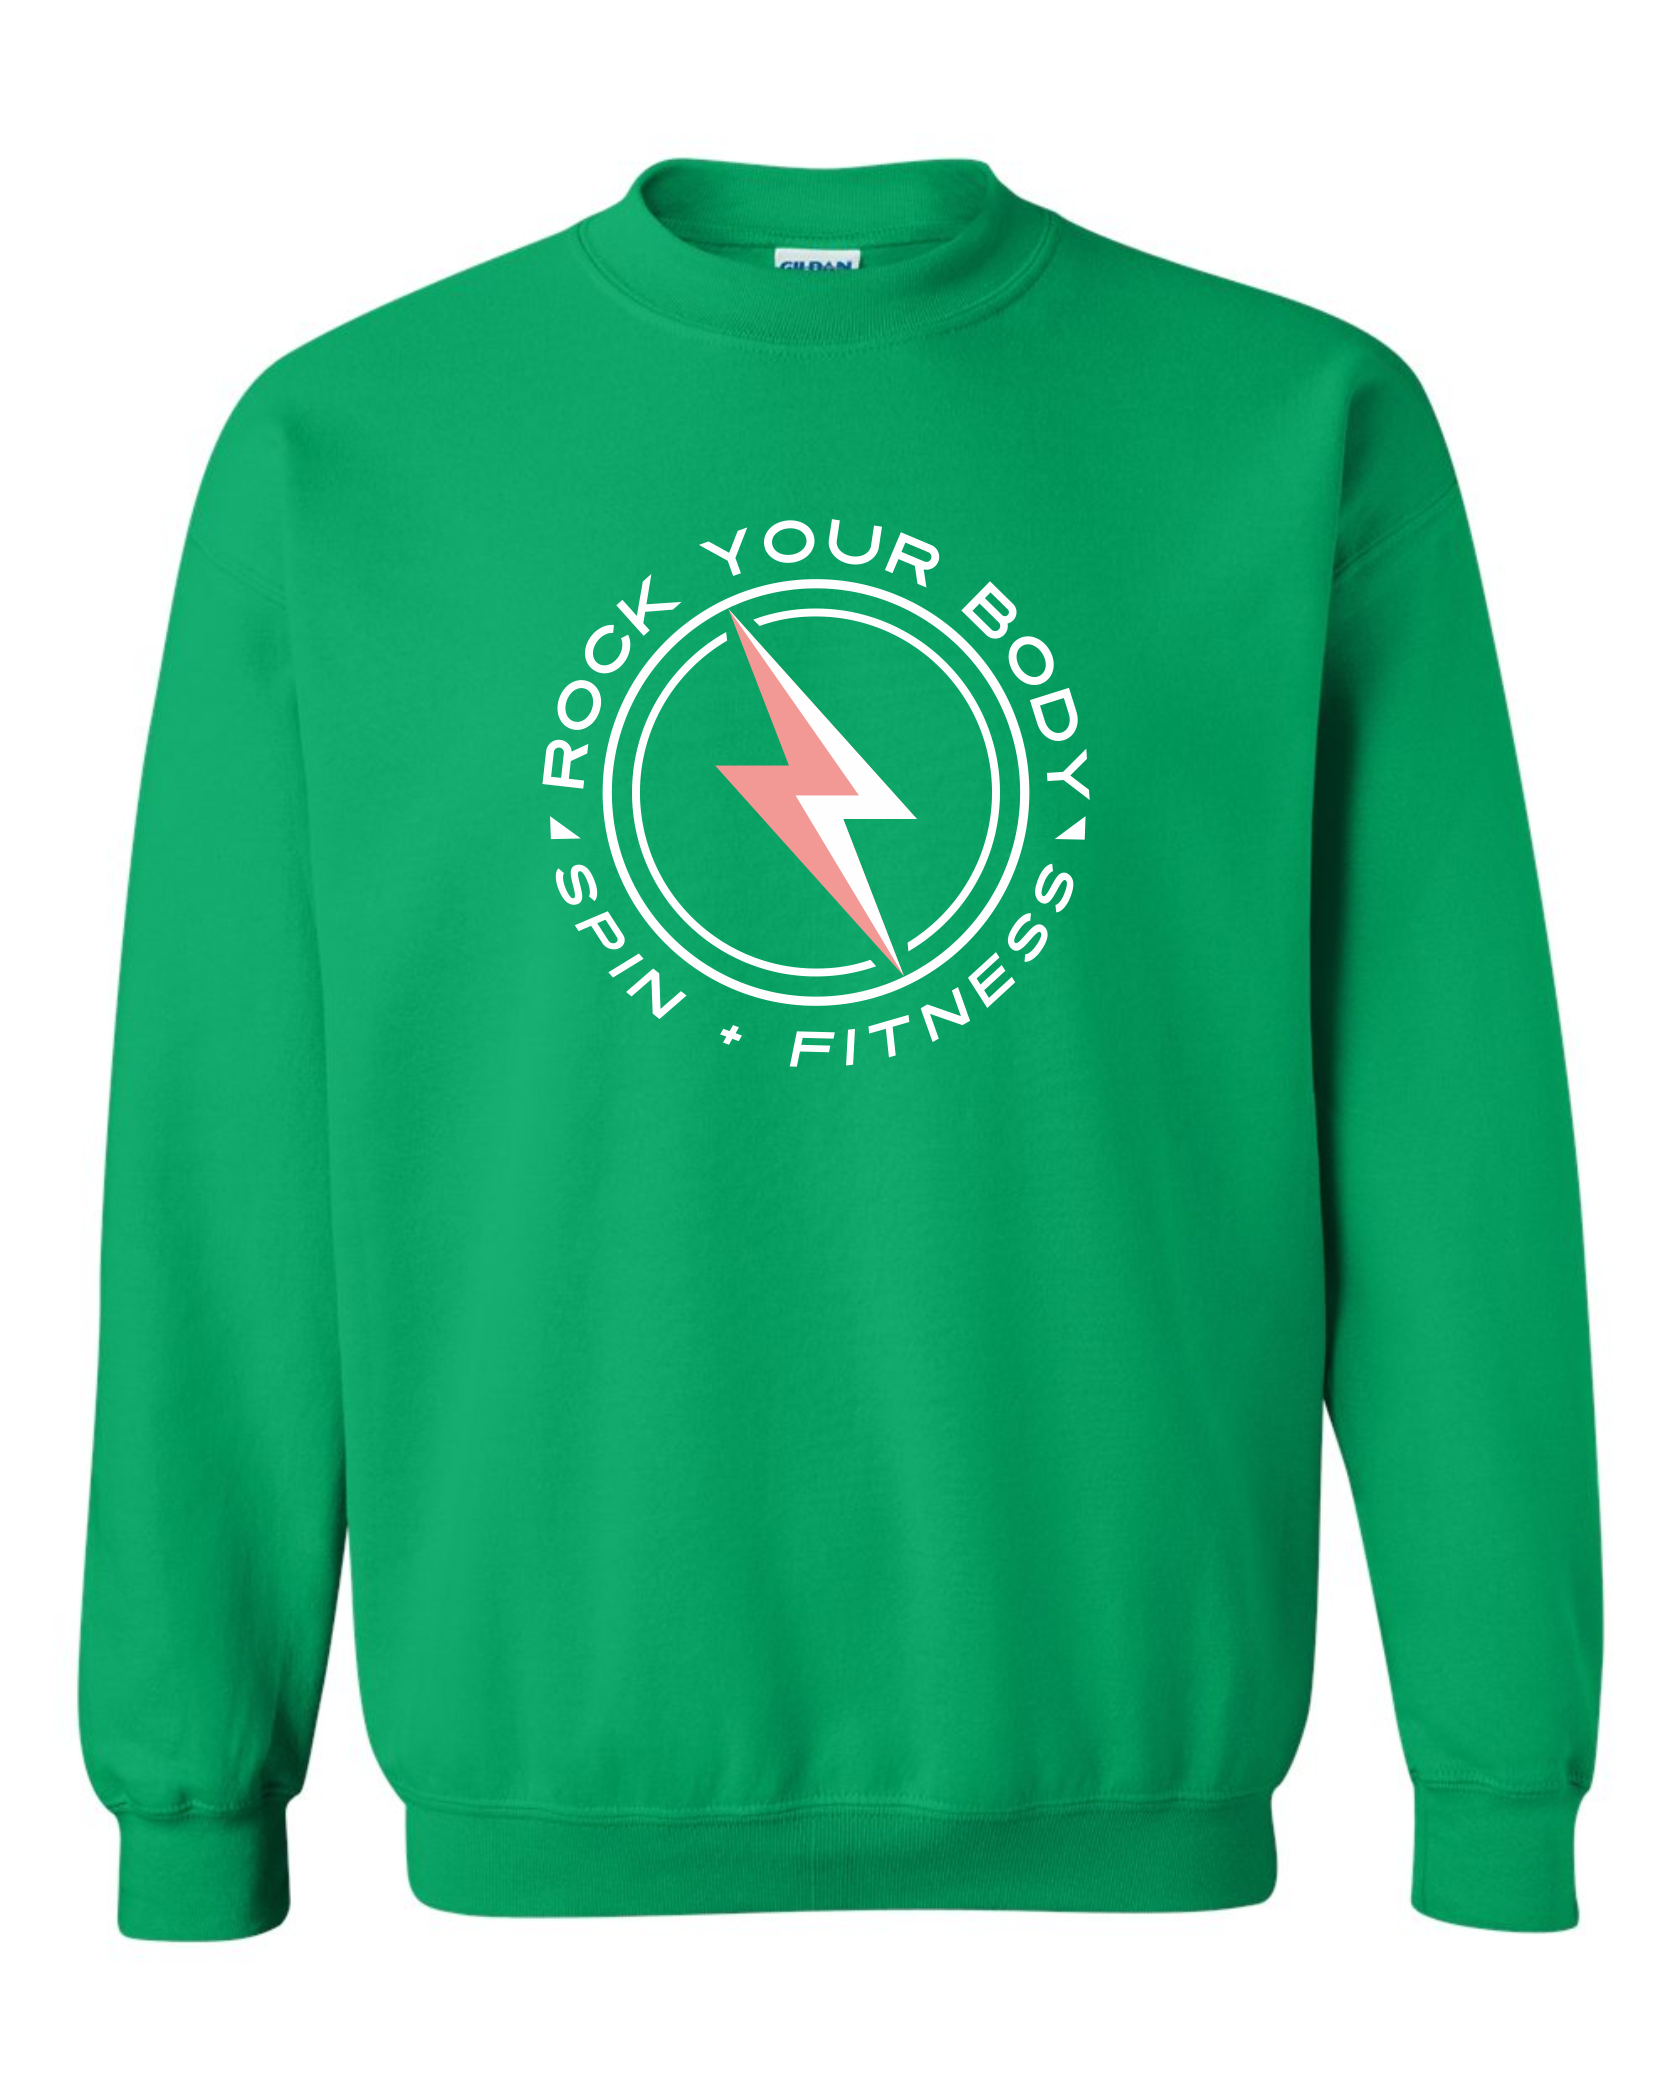 Rock Your Body - Irish Green  Crewneck Sweatshirt